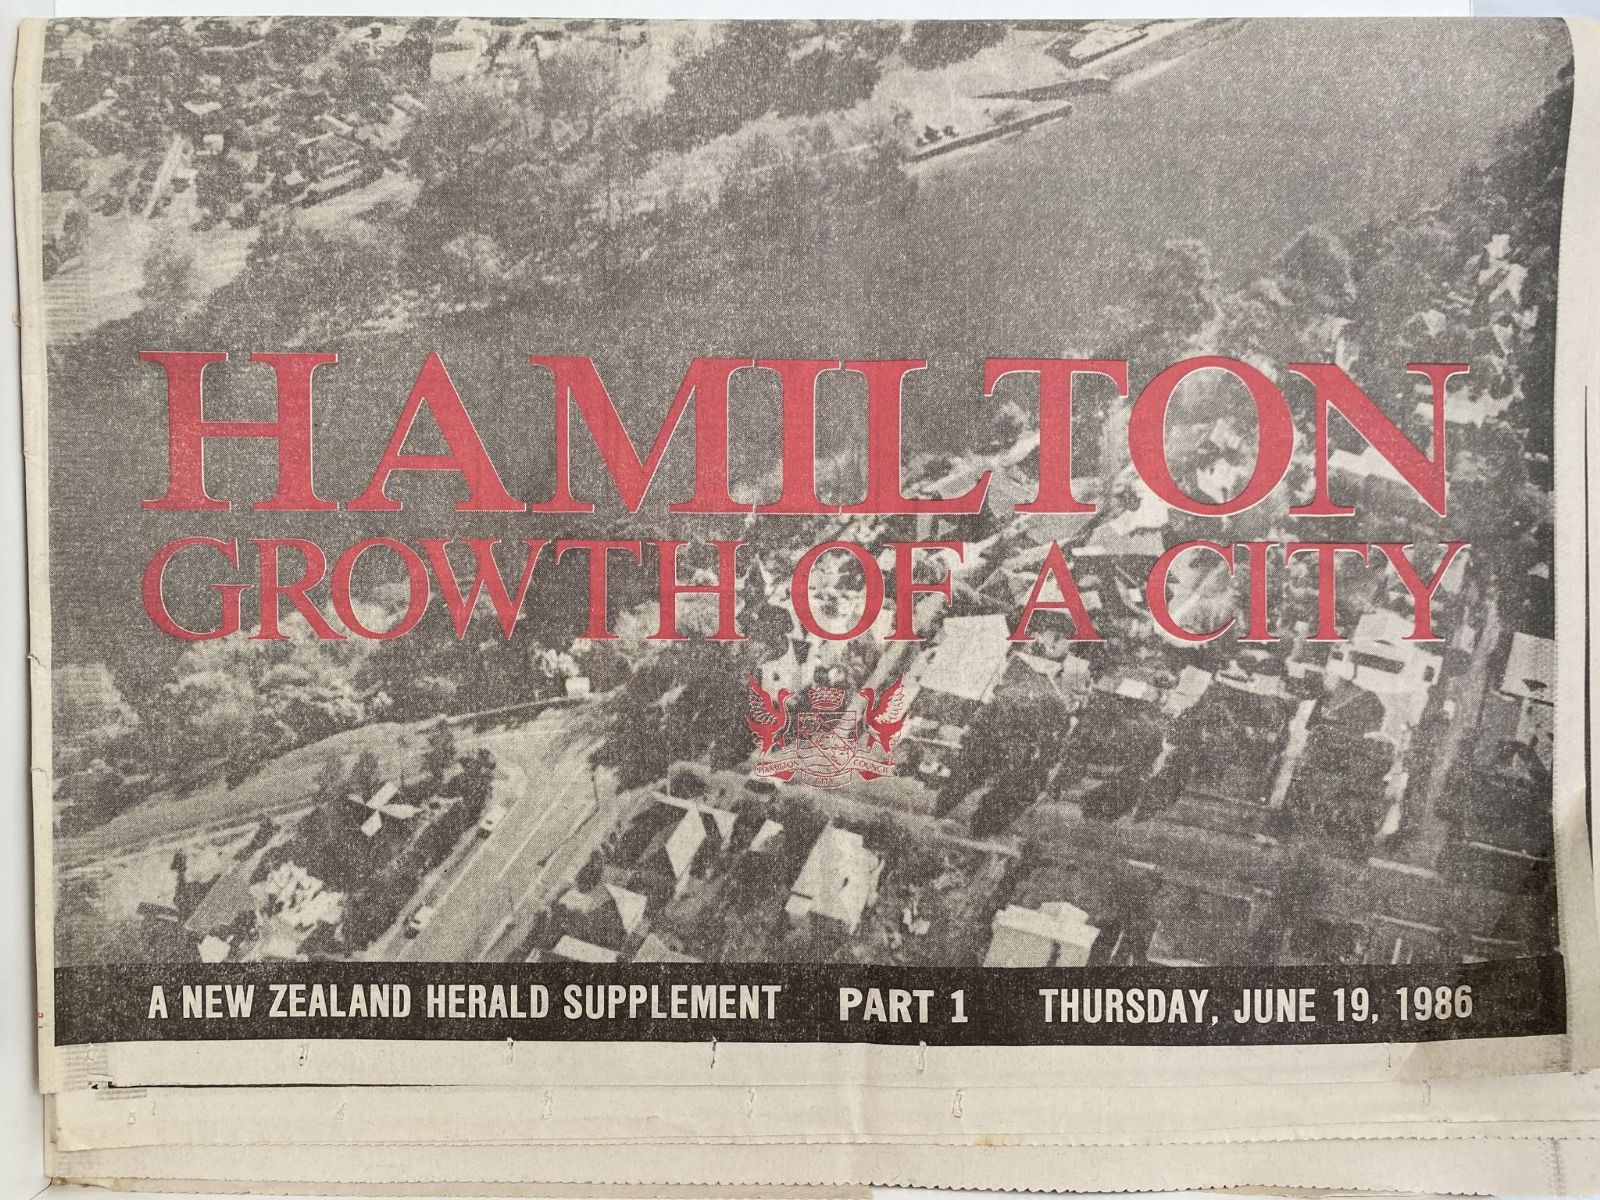 OLD NEWSPAPER: The New Zealand Herald, 19 June 1986 - Hamilton supplement